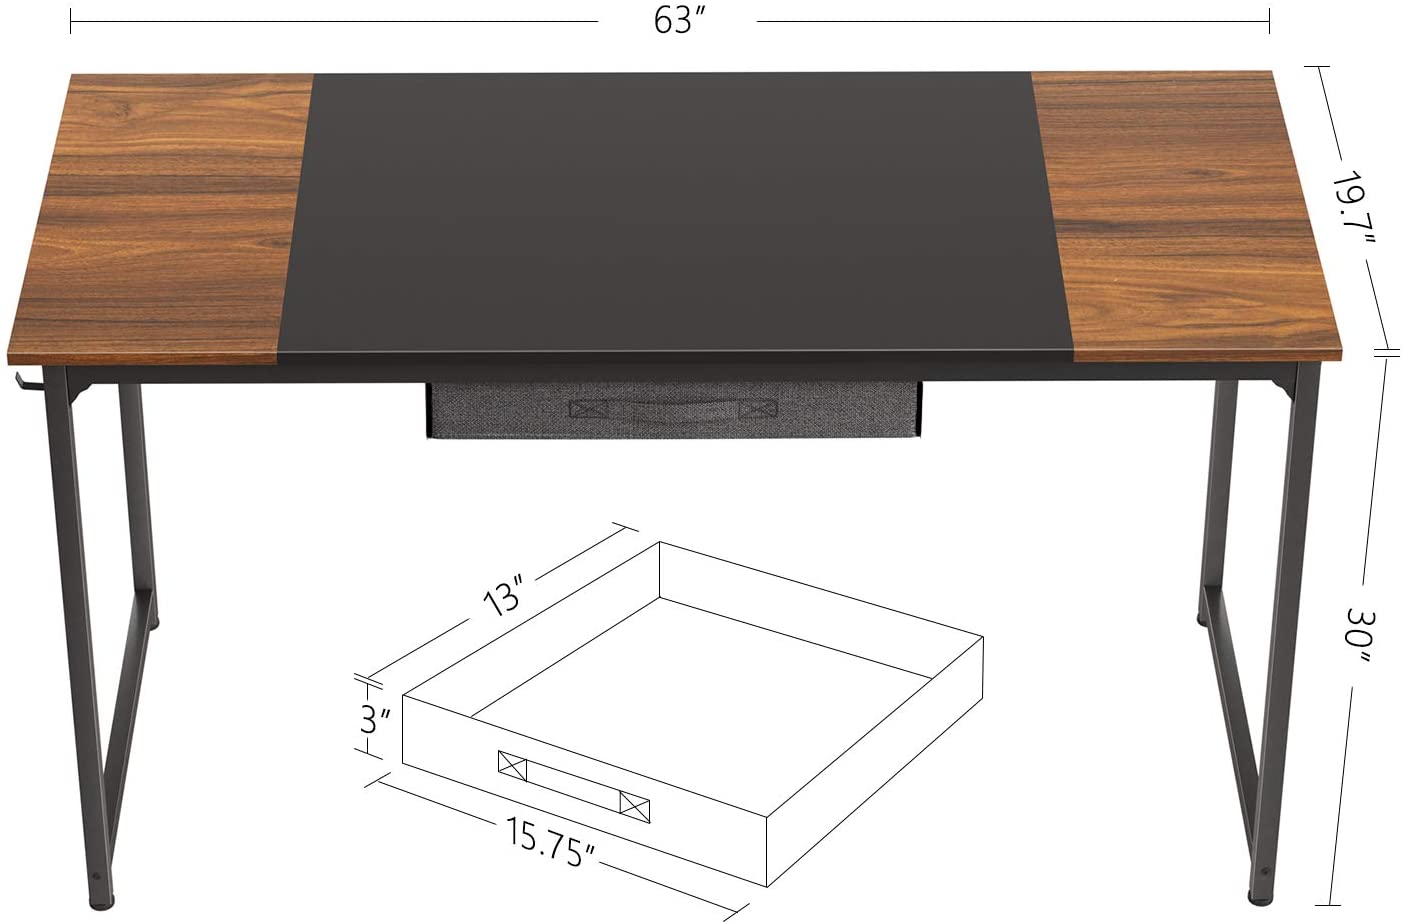 CubiCubi Computer Desk with Drawer Splice Board, Black and Espresso Finish,63" - image 5 of 7